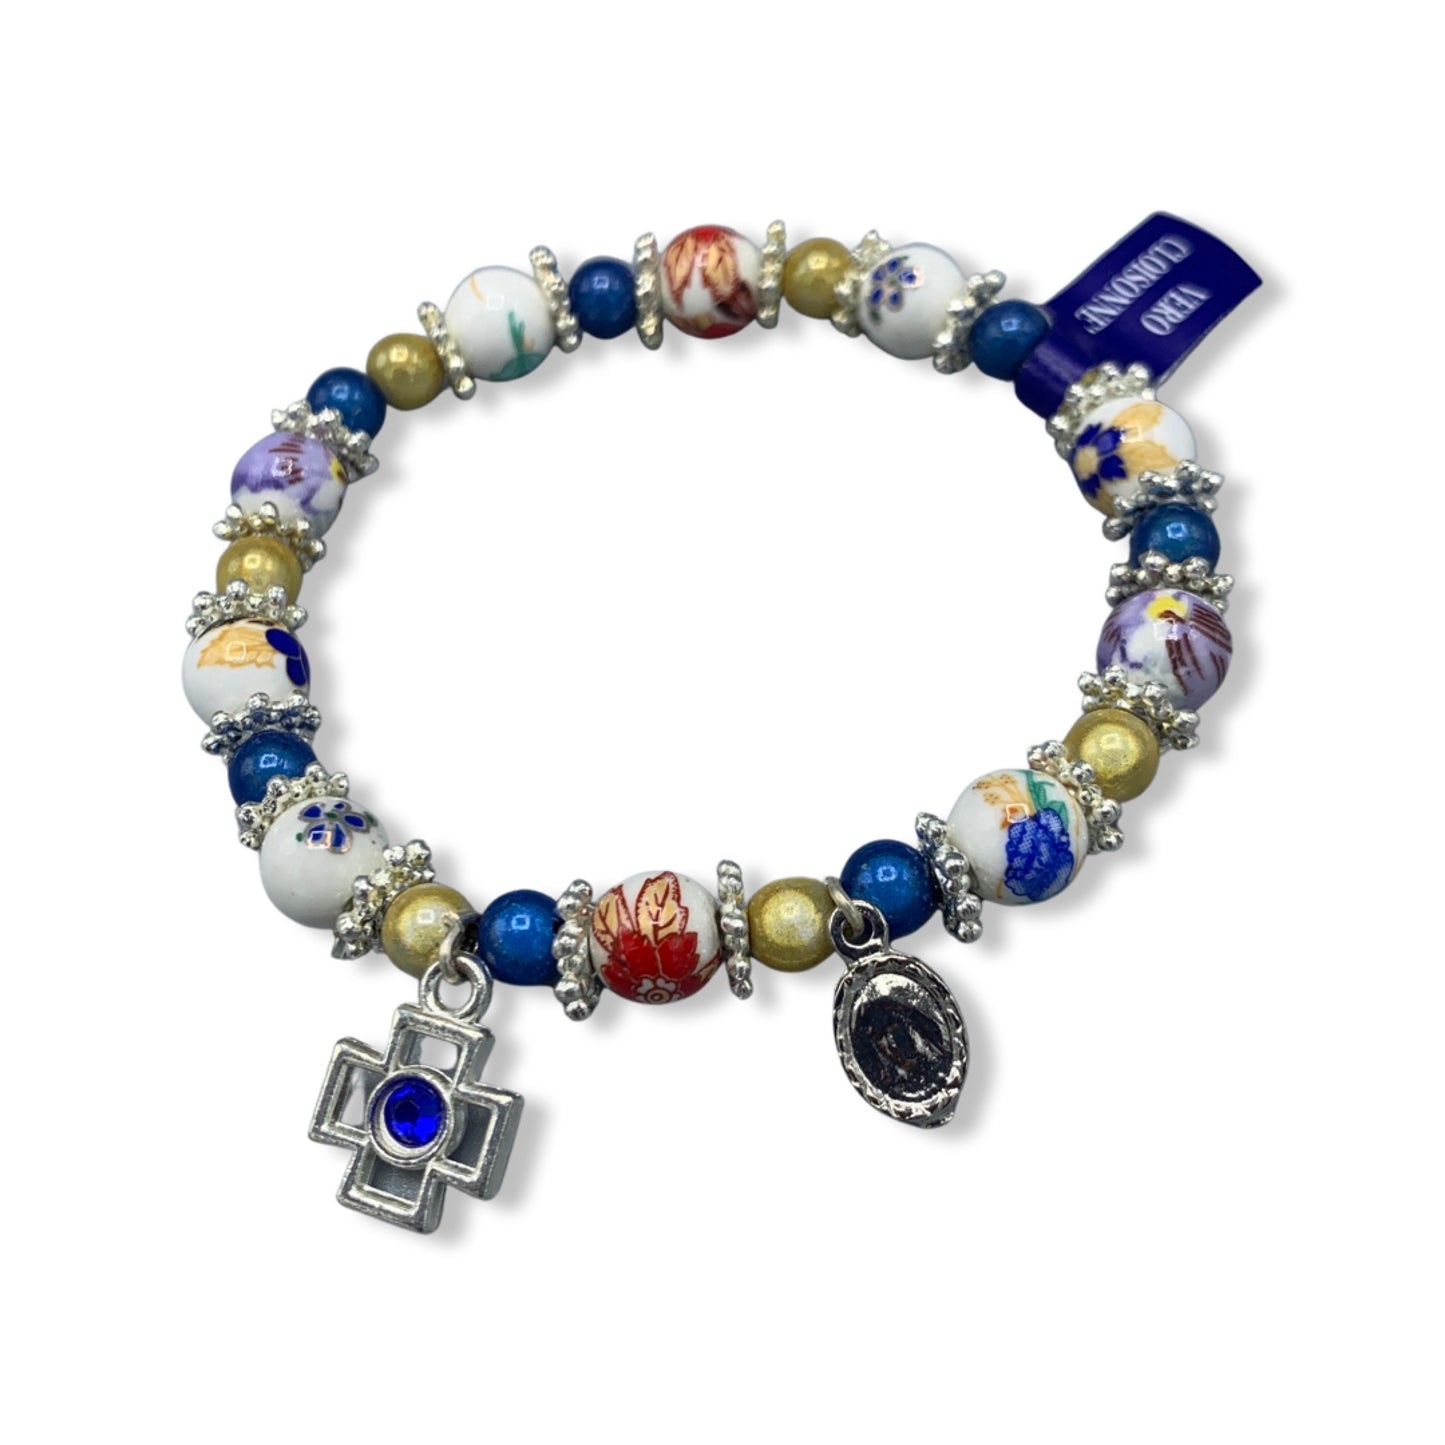 Ceramic Bead Bracelet of Assorted Colors